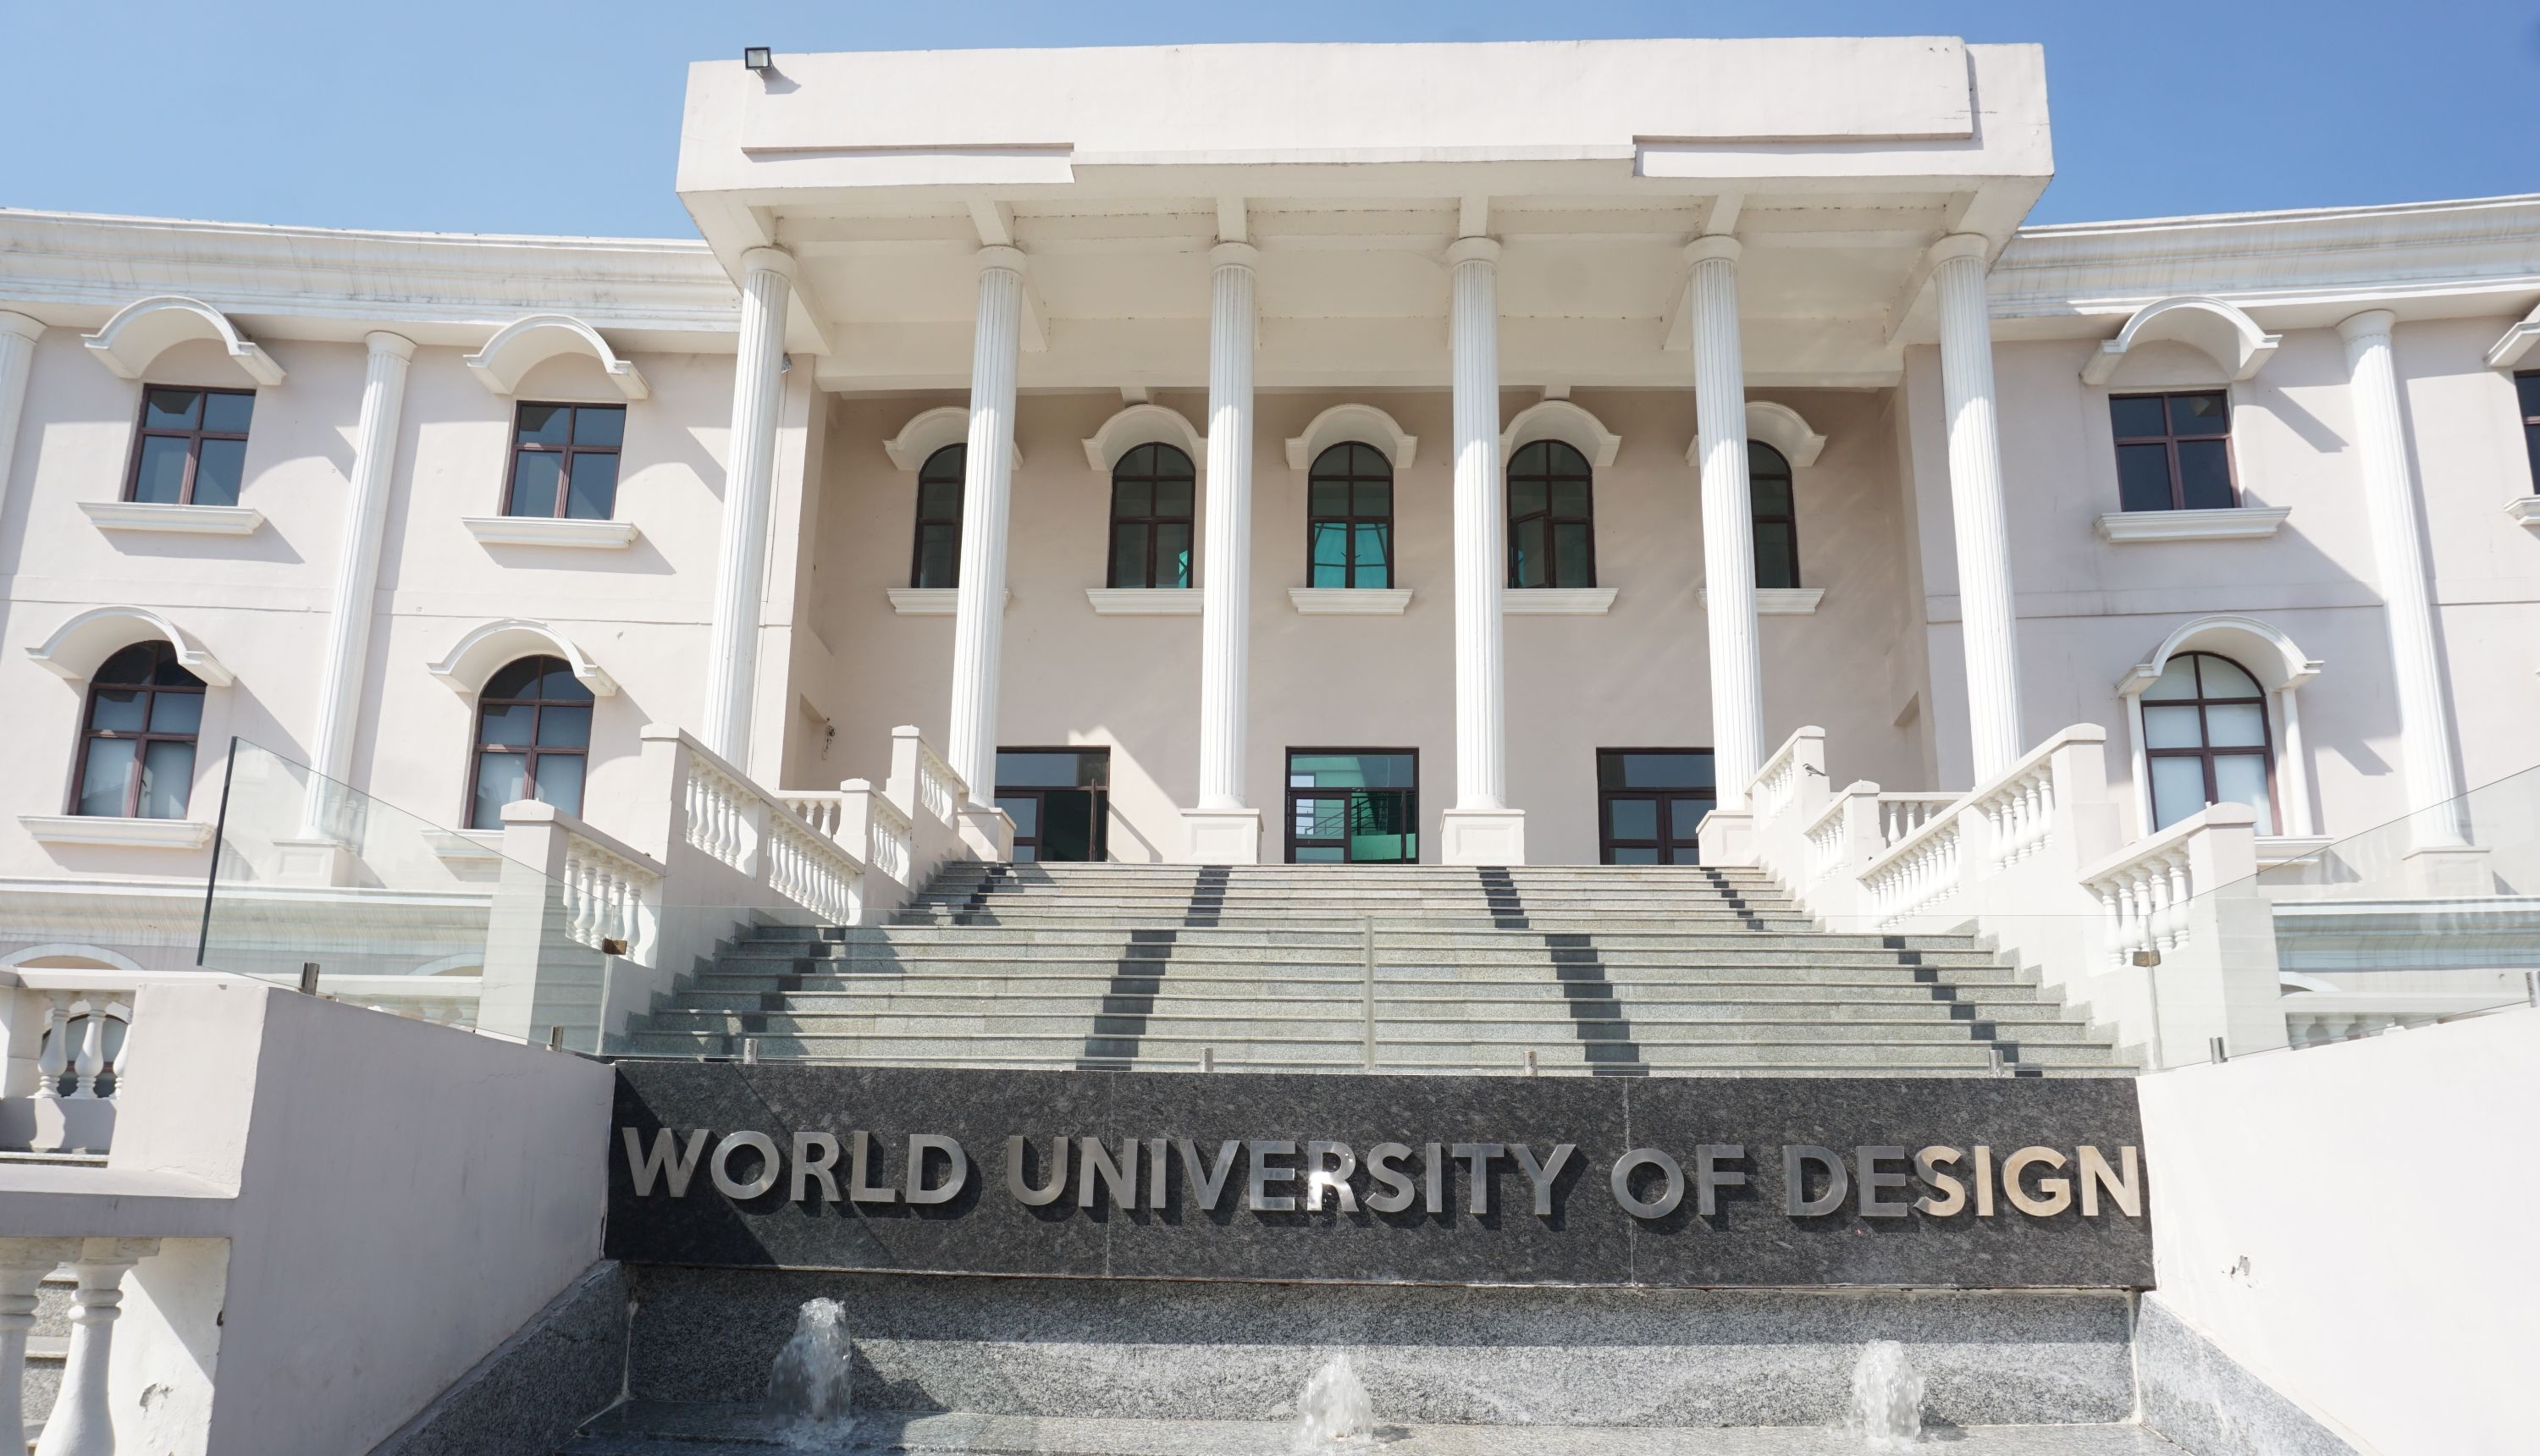 World University of Design